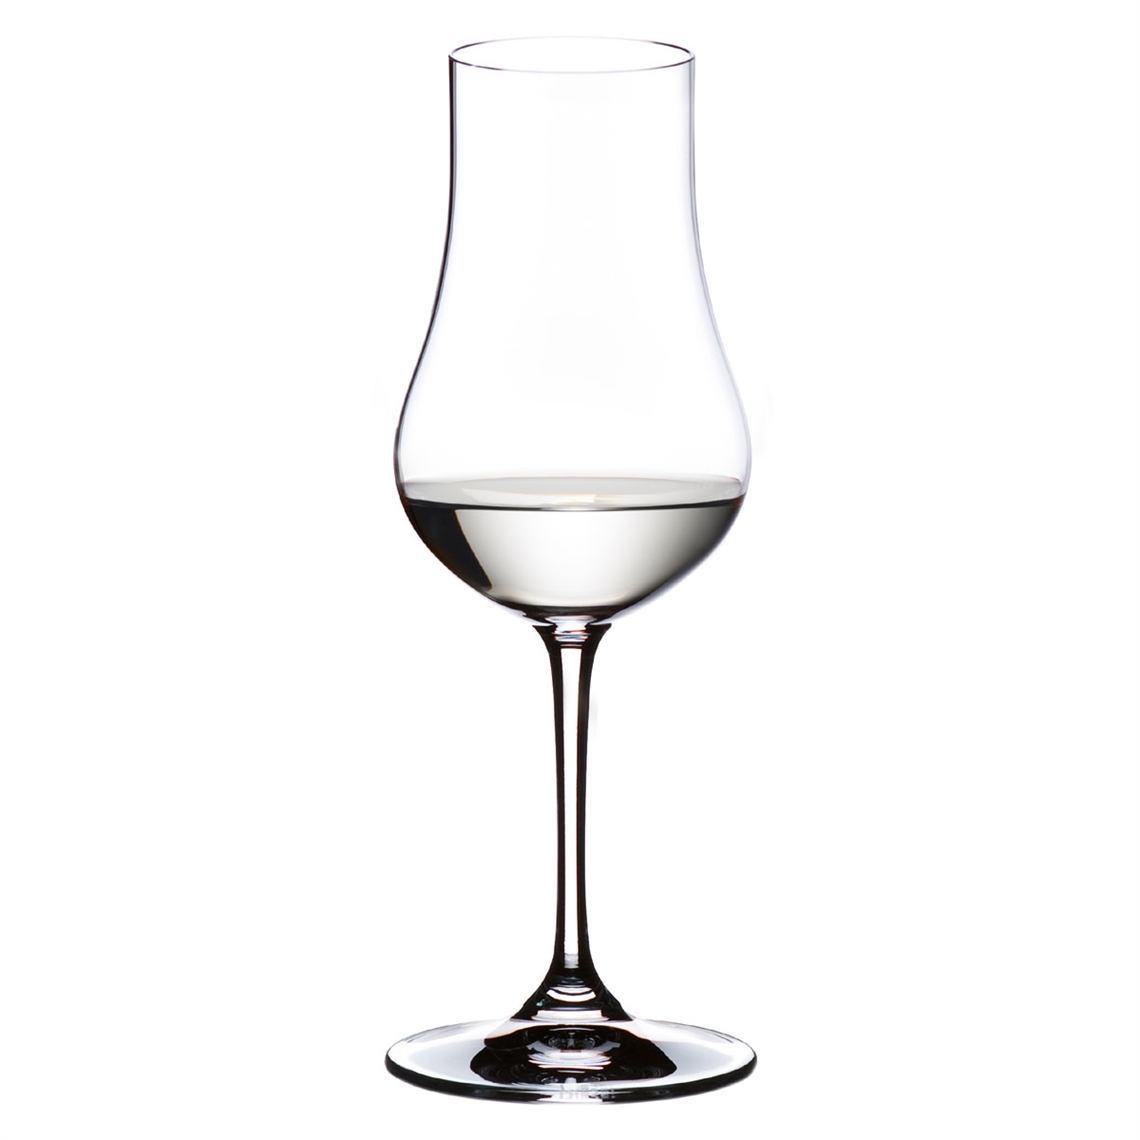 Riedel Rum Glass Set - Set of 4 - 5515/11